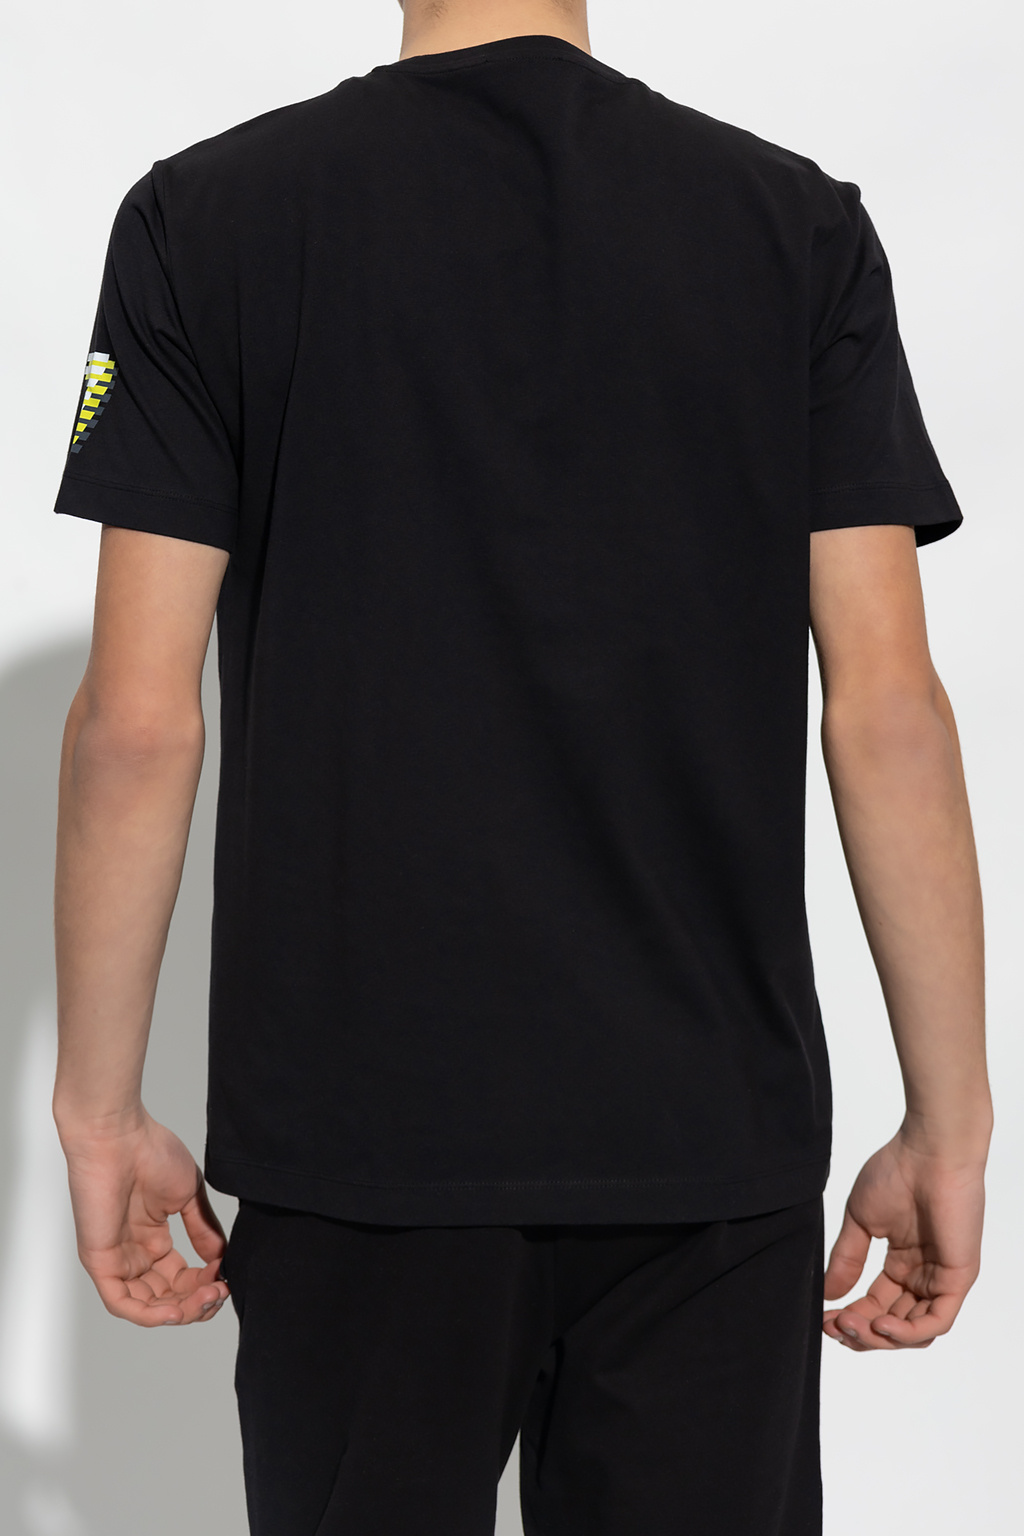 EA7 Emporio waistband armani T-shirt with logo